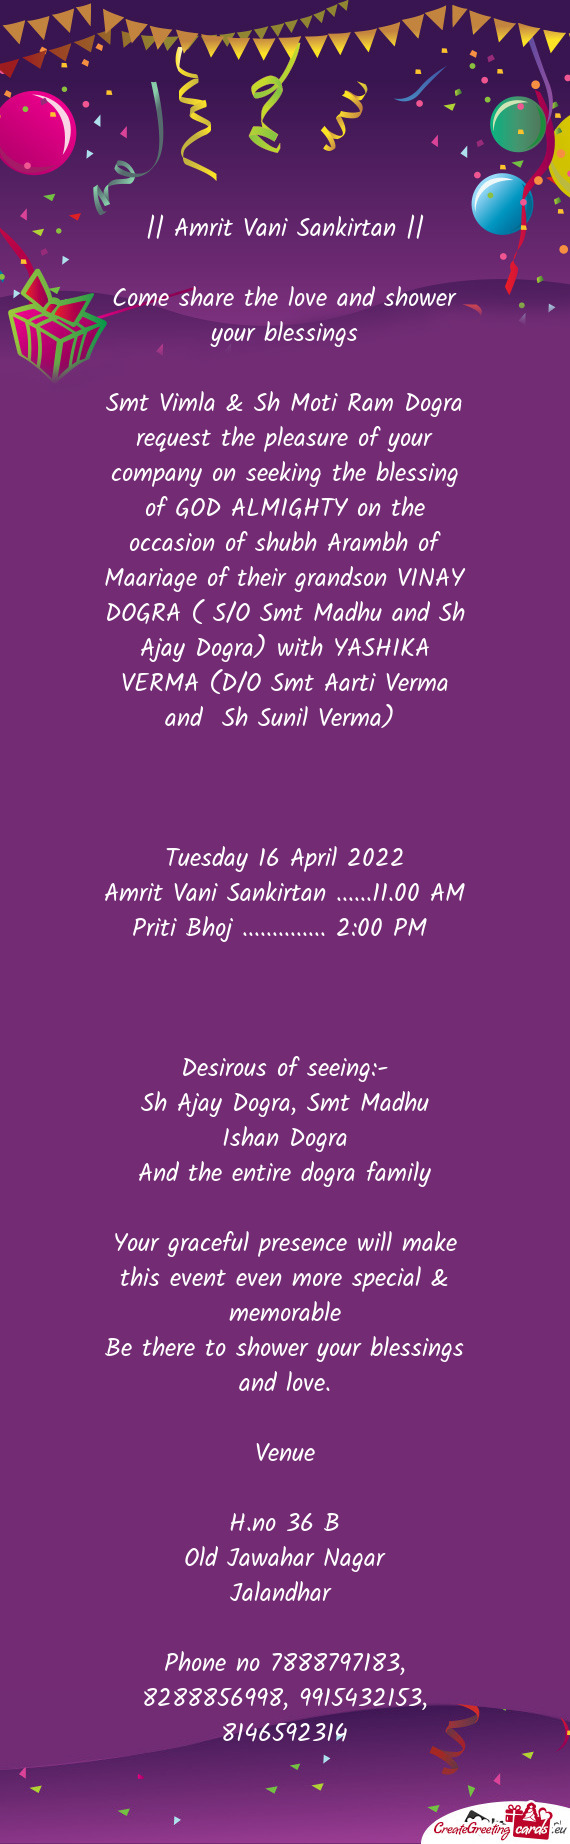 Smt Vimla & Sh Moti Ram Dogra request the pleasure of your company on seeking the blessing of GOD AL